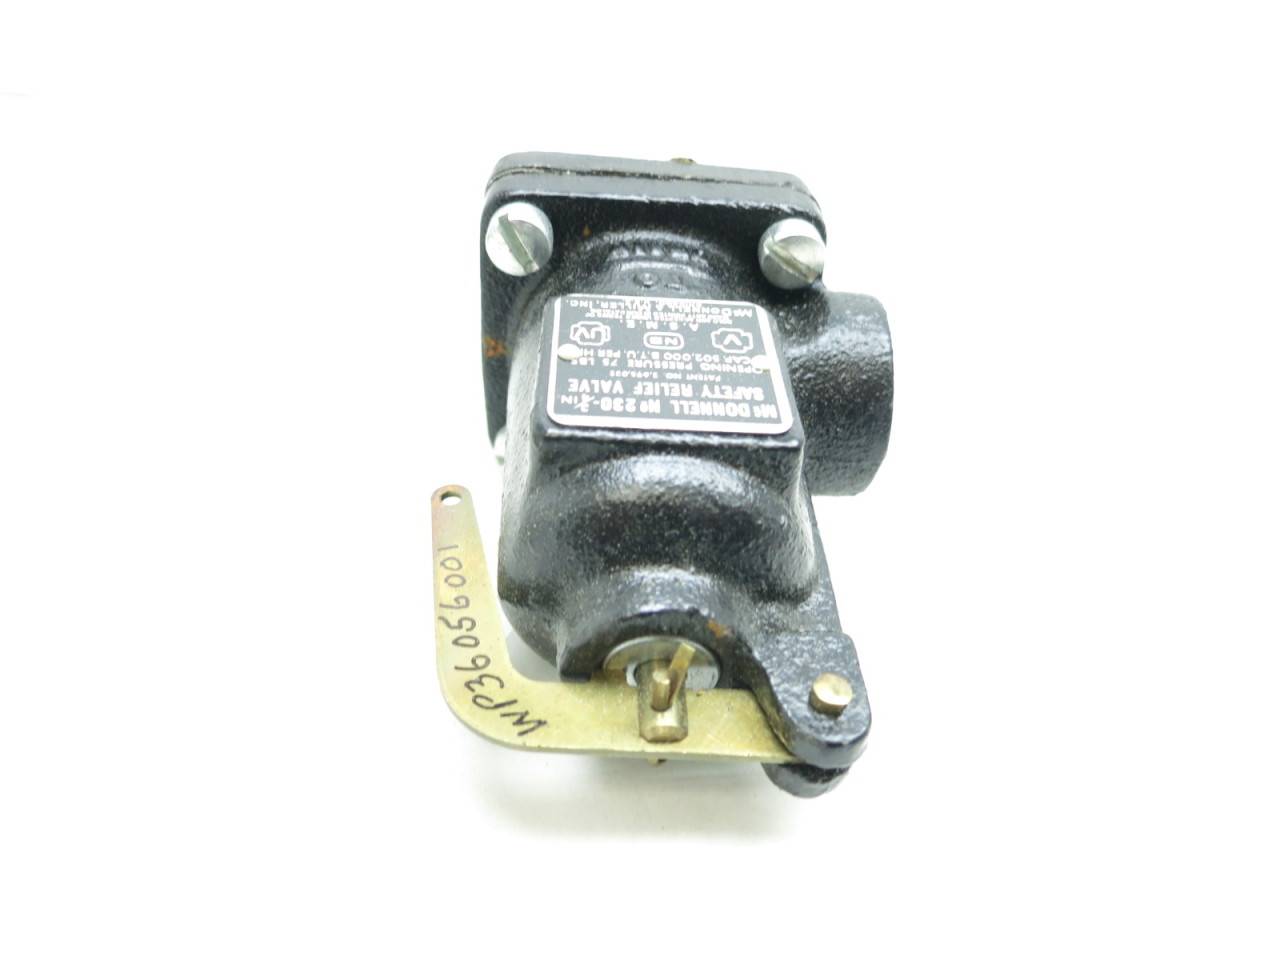 McDonnell & Miller No 230-3/4" Pressure relief valve